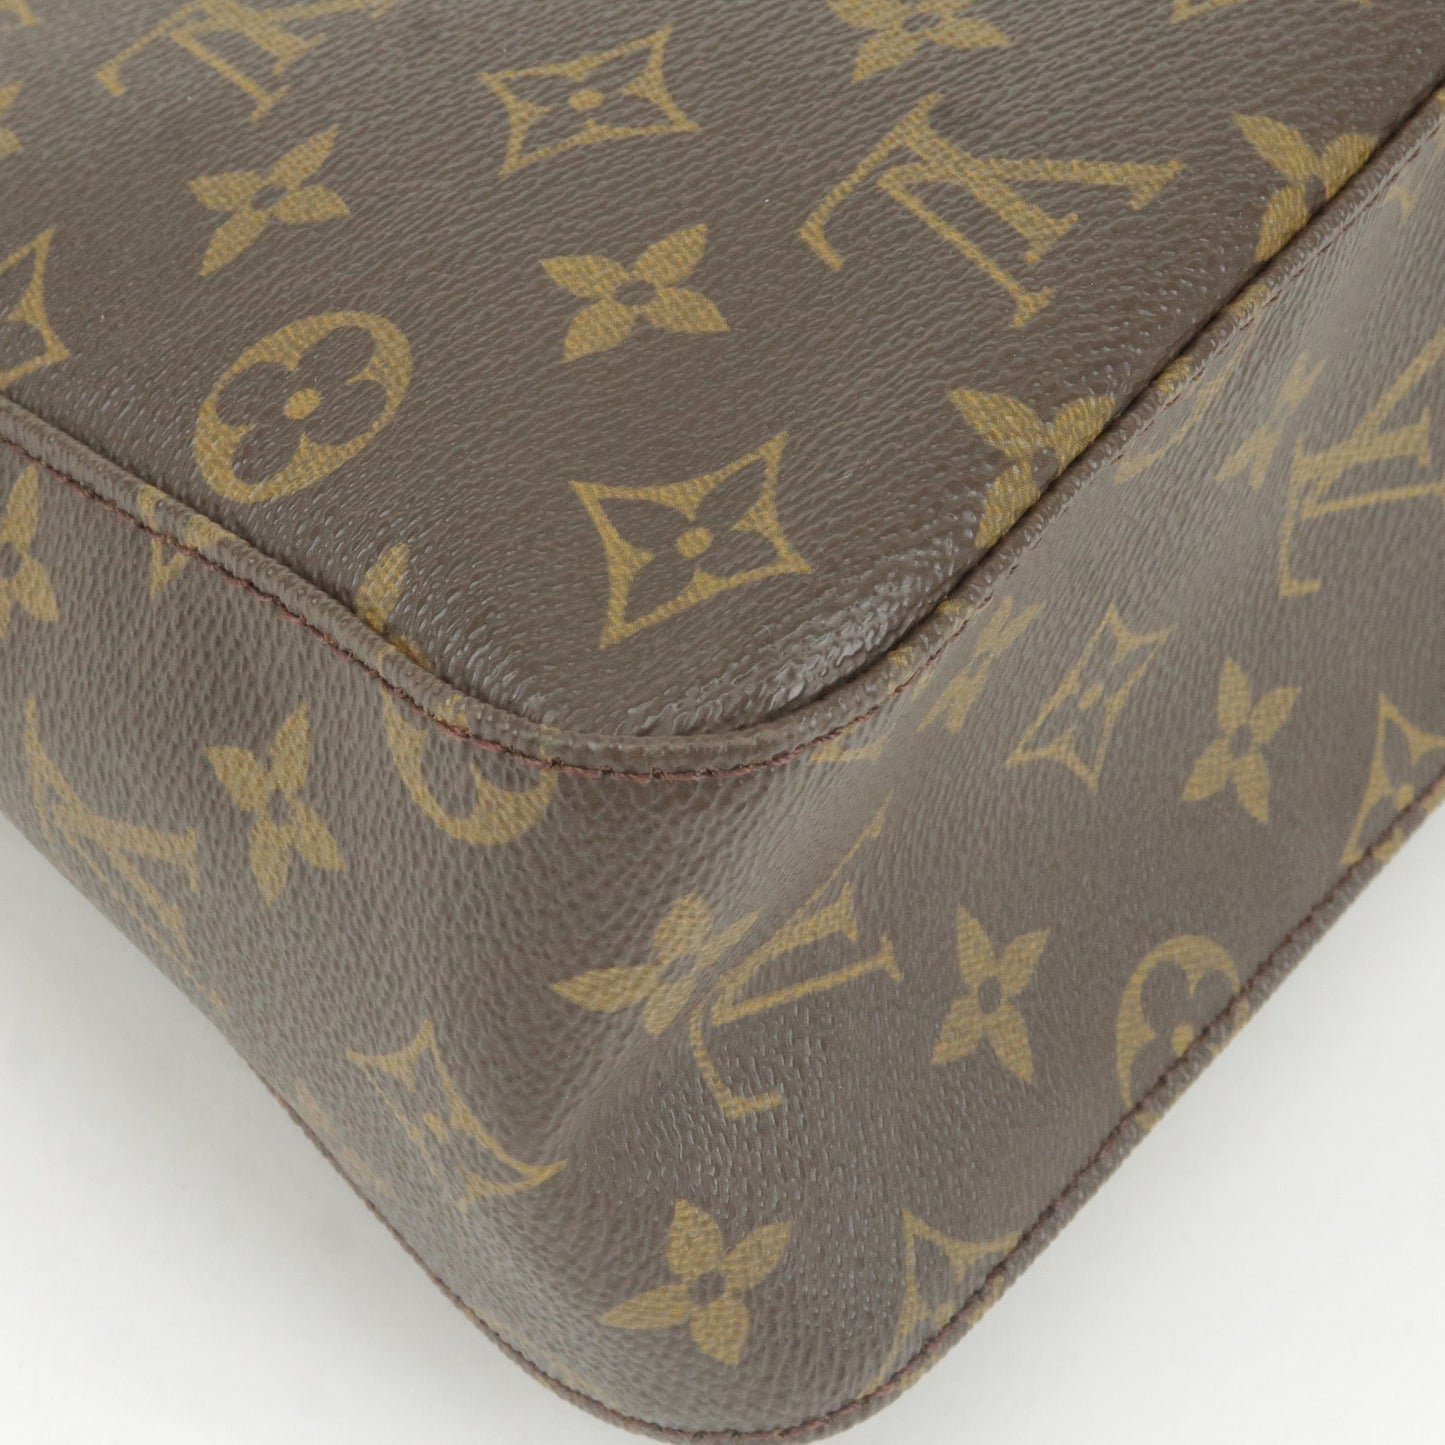 Auth Louis Vuitton Monogram Mini Looping M51147 Women's Shoulder Bag